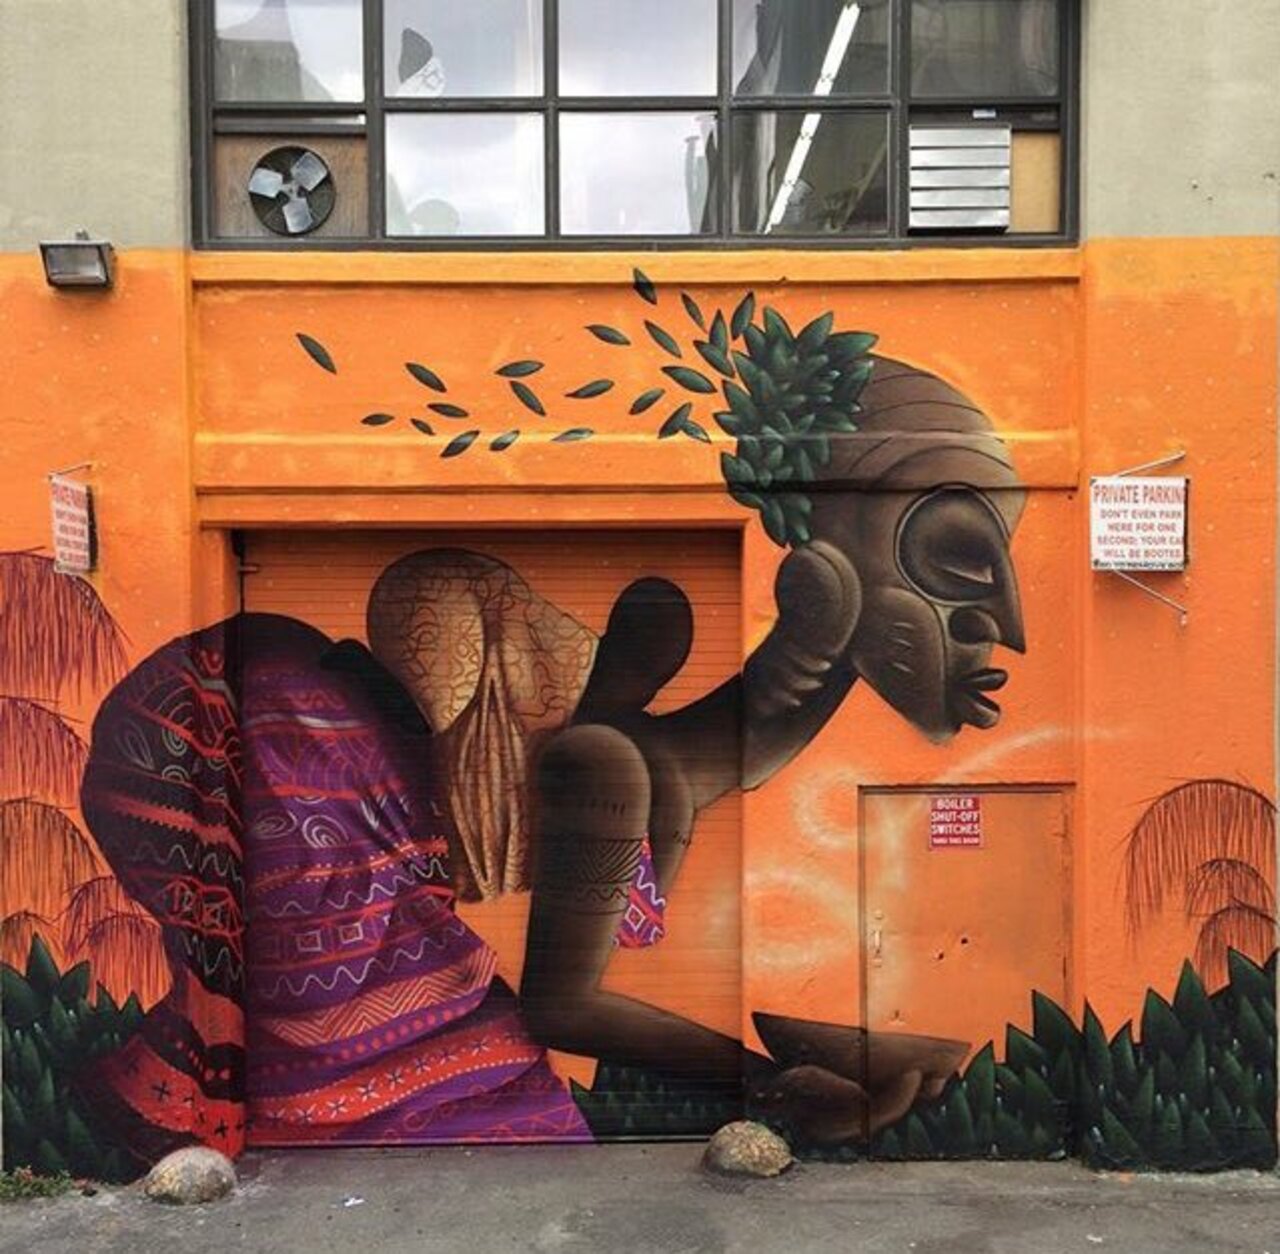 RT @Eularism: New Street Art by Alexandre Keto in NYC 

#art #graffiti #mural #streetart https://t.co/qbi0MOIaFF